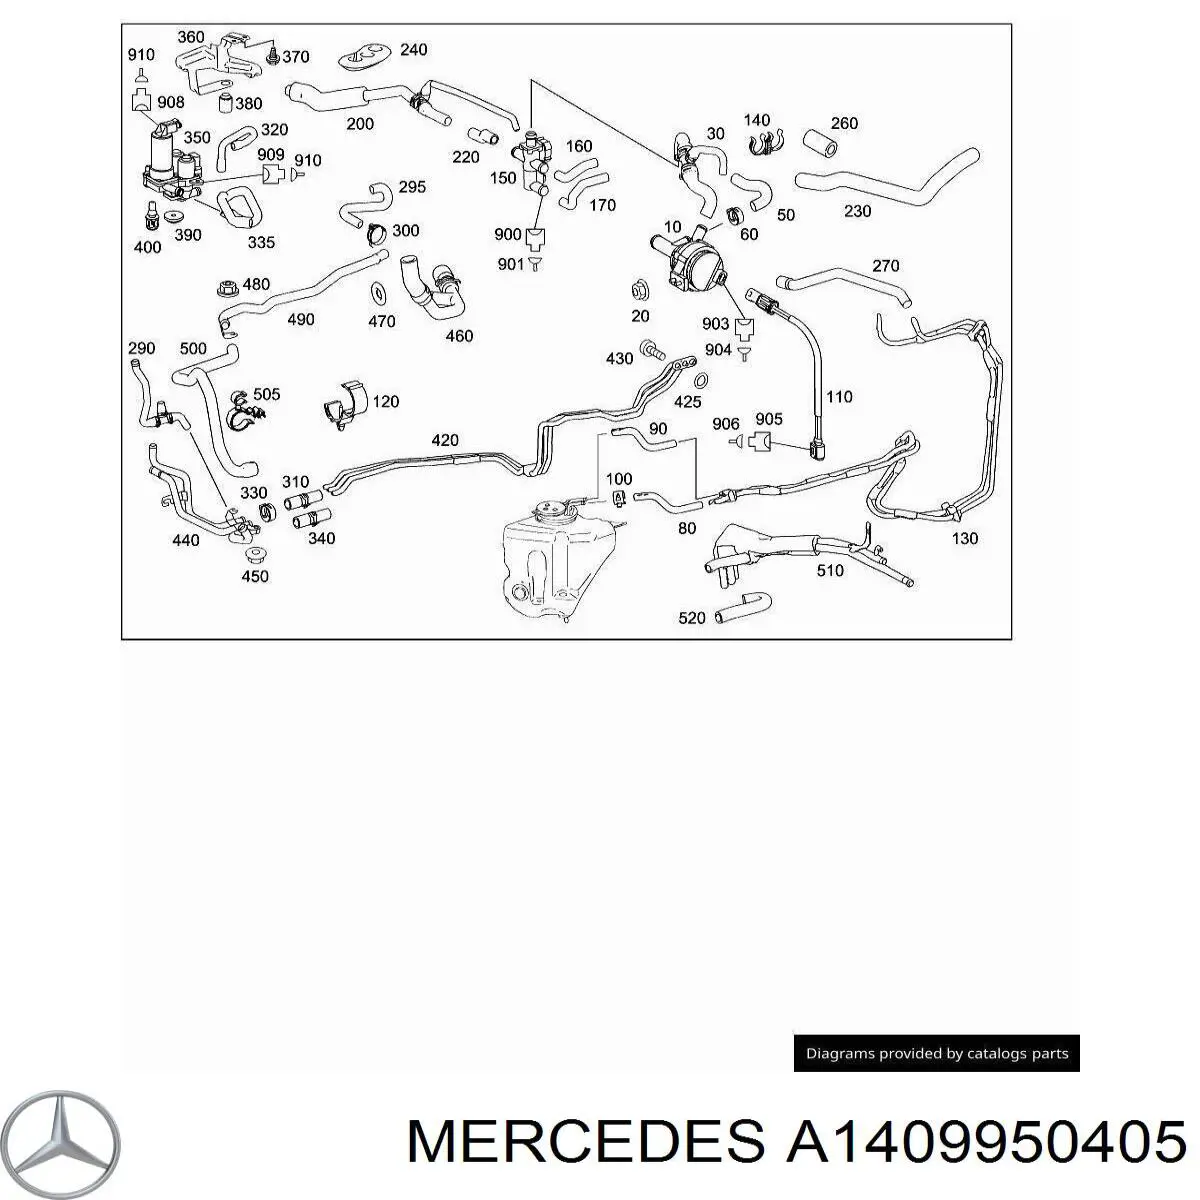 1409950405 Mercedes